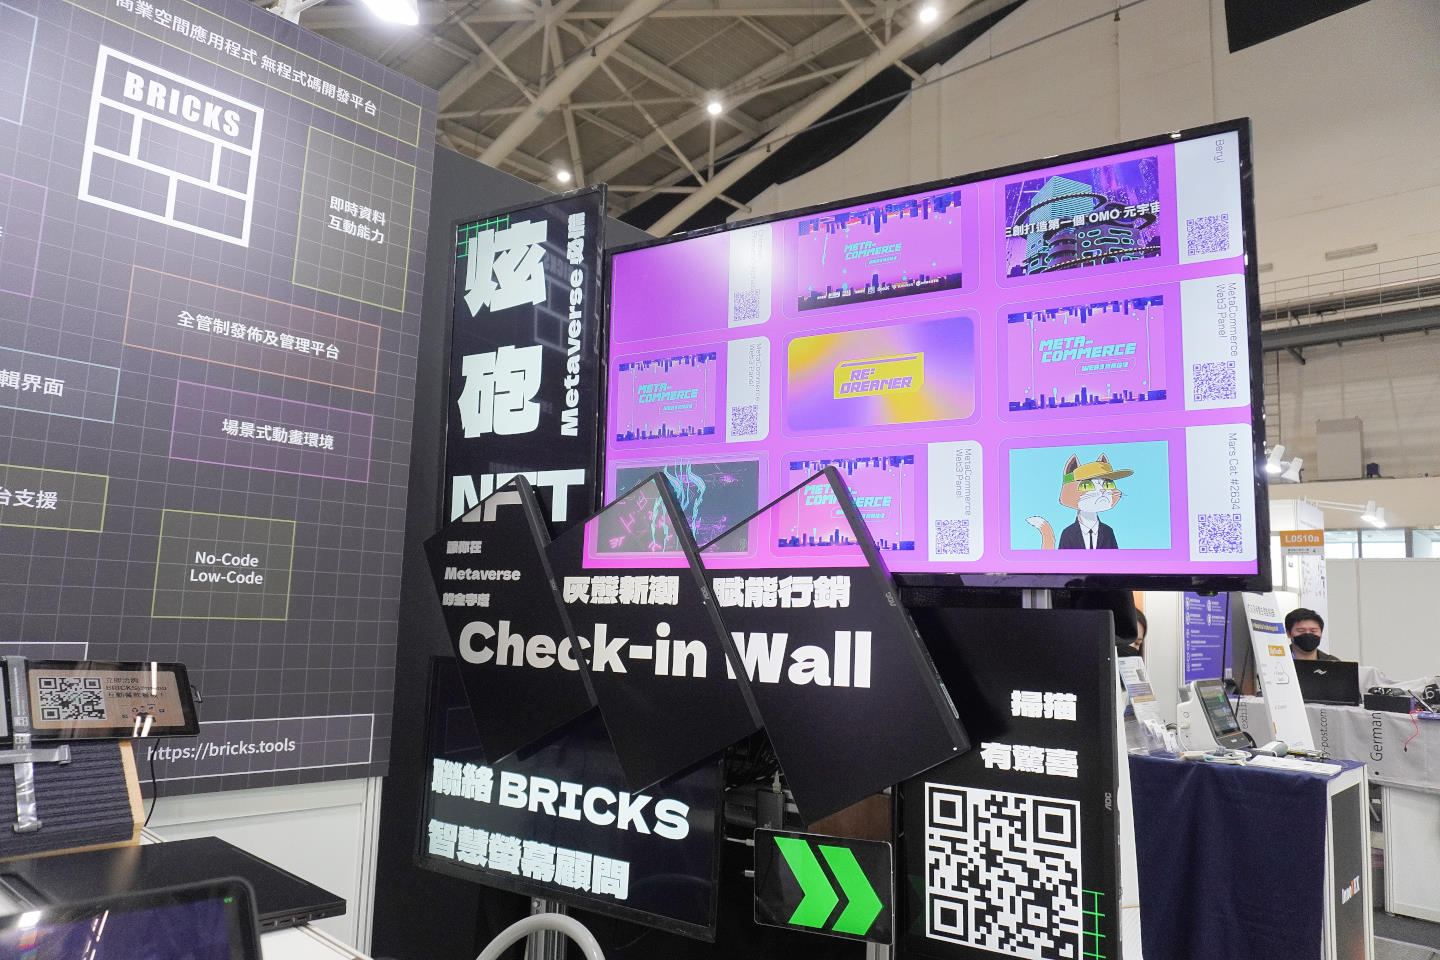 Bricks的方塊磚技術可以協助使用者輕鬆拼接不規則造型的電視牆。